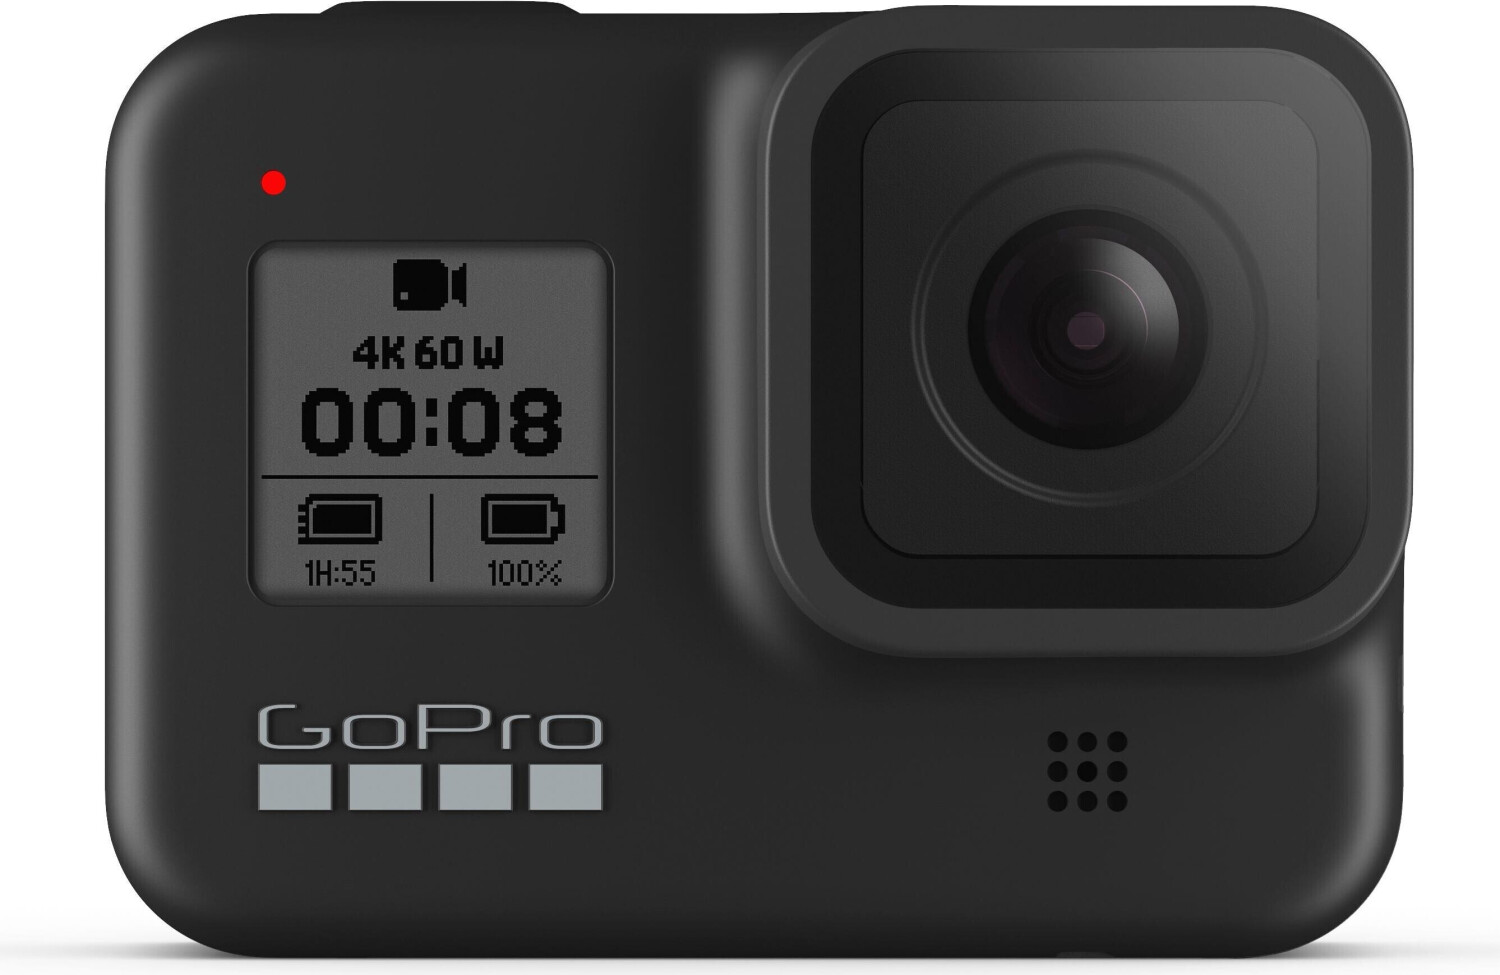 GoPro HERO8 Black Action Cam